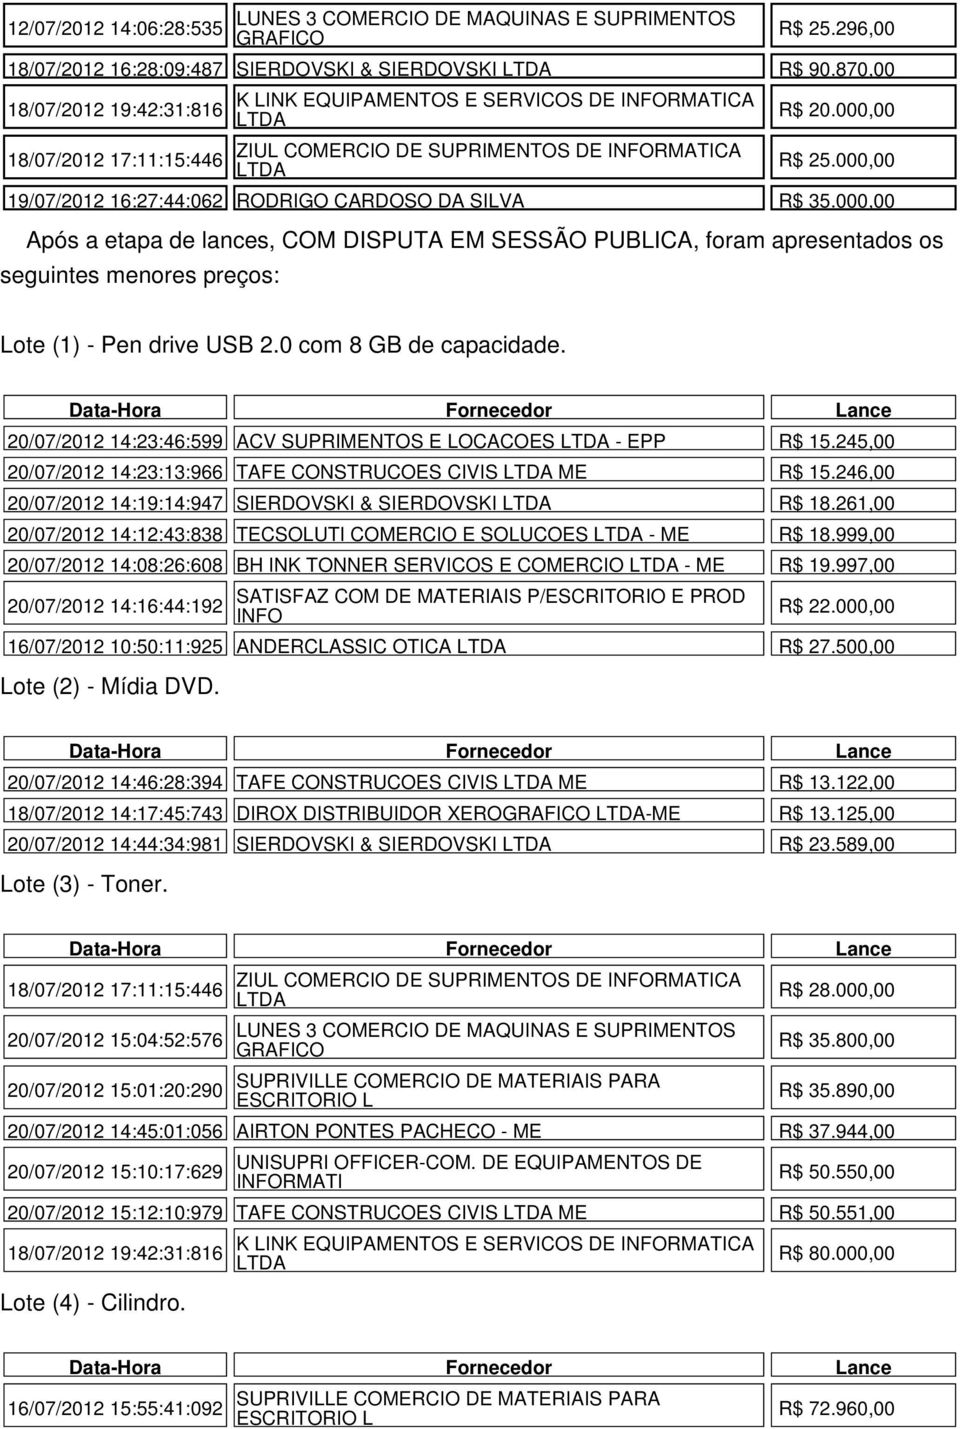 Data-Hora Fornecedor Lance 20/07/2012 14:23:46:599 ACV SUPRIMENTOS E LOCACOES - EPP R$ 15.245,00 20/07/2012 14:23:13:966 TAFE CONSTRUCOES CIVIS ME R$ 15.